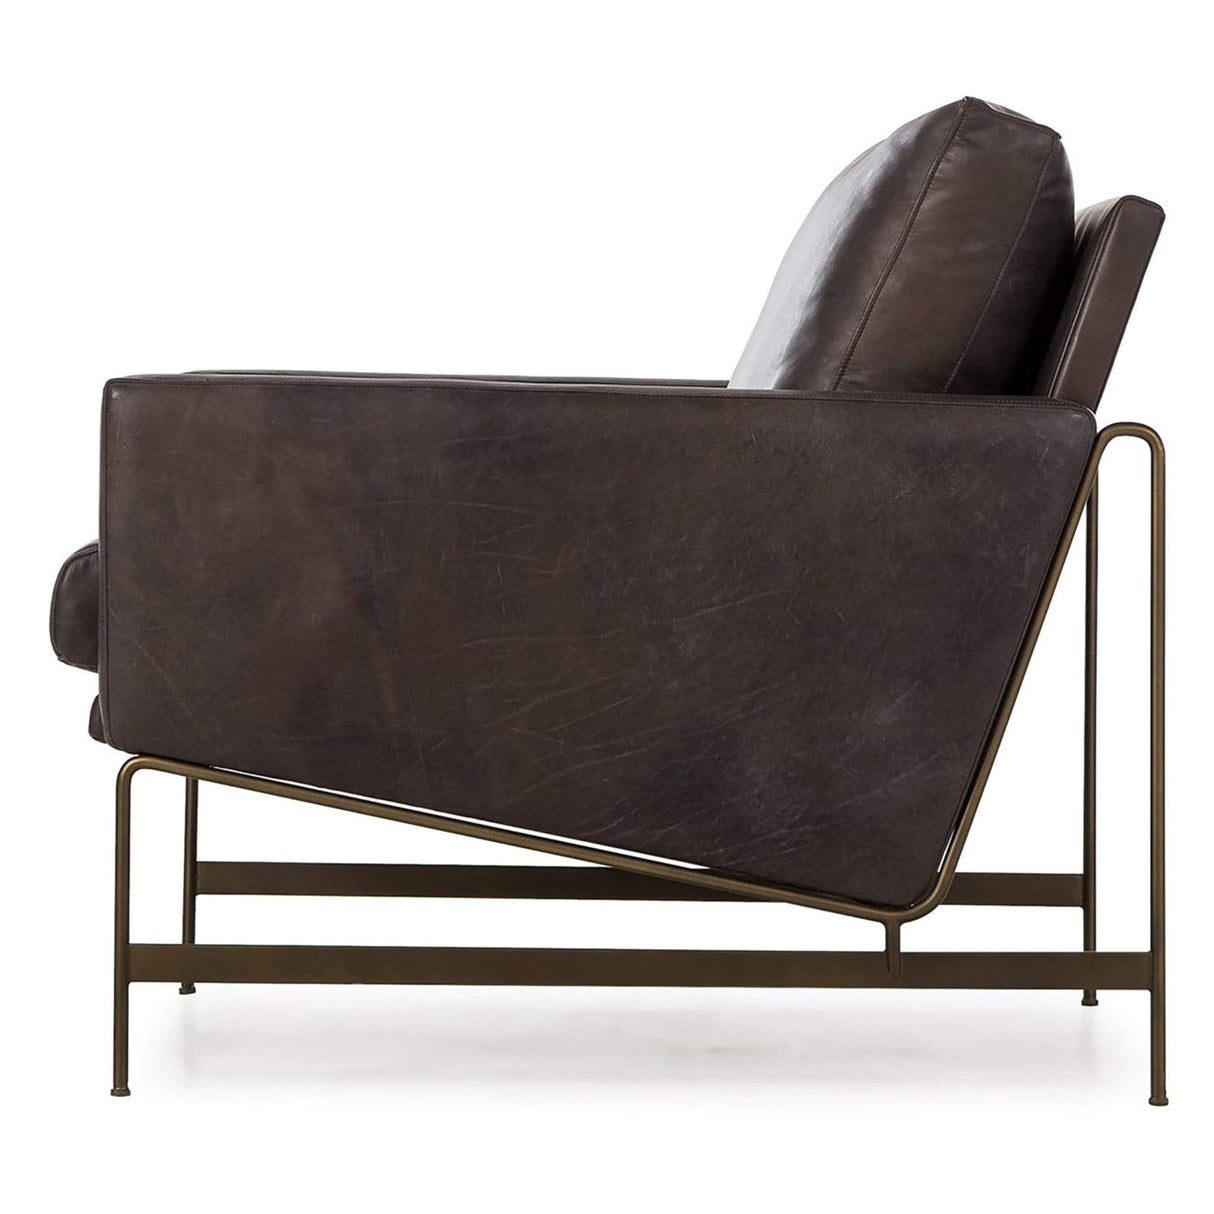 Thomas Bina Vanessa Chair - Destroyed Black Leather Furniture thomas-bina-0702146